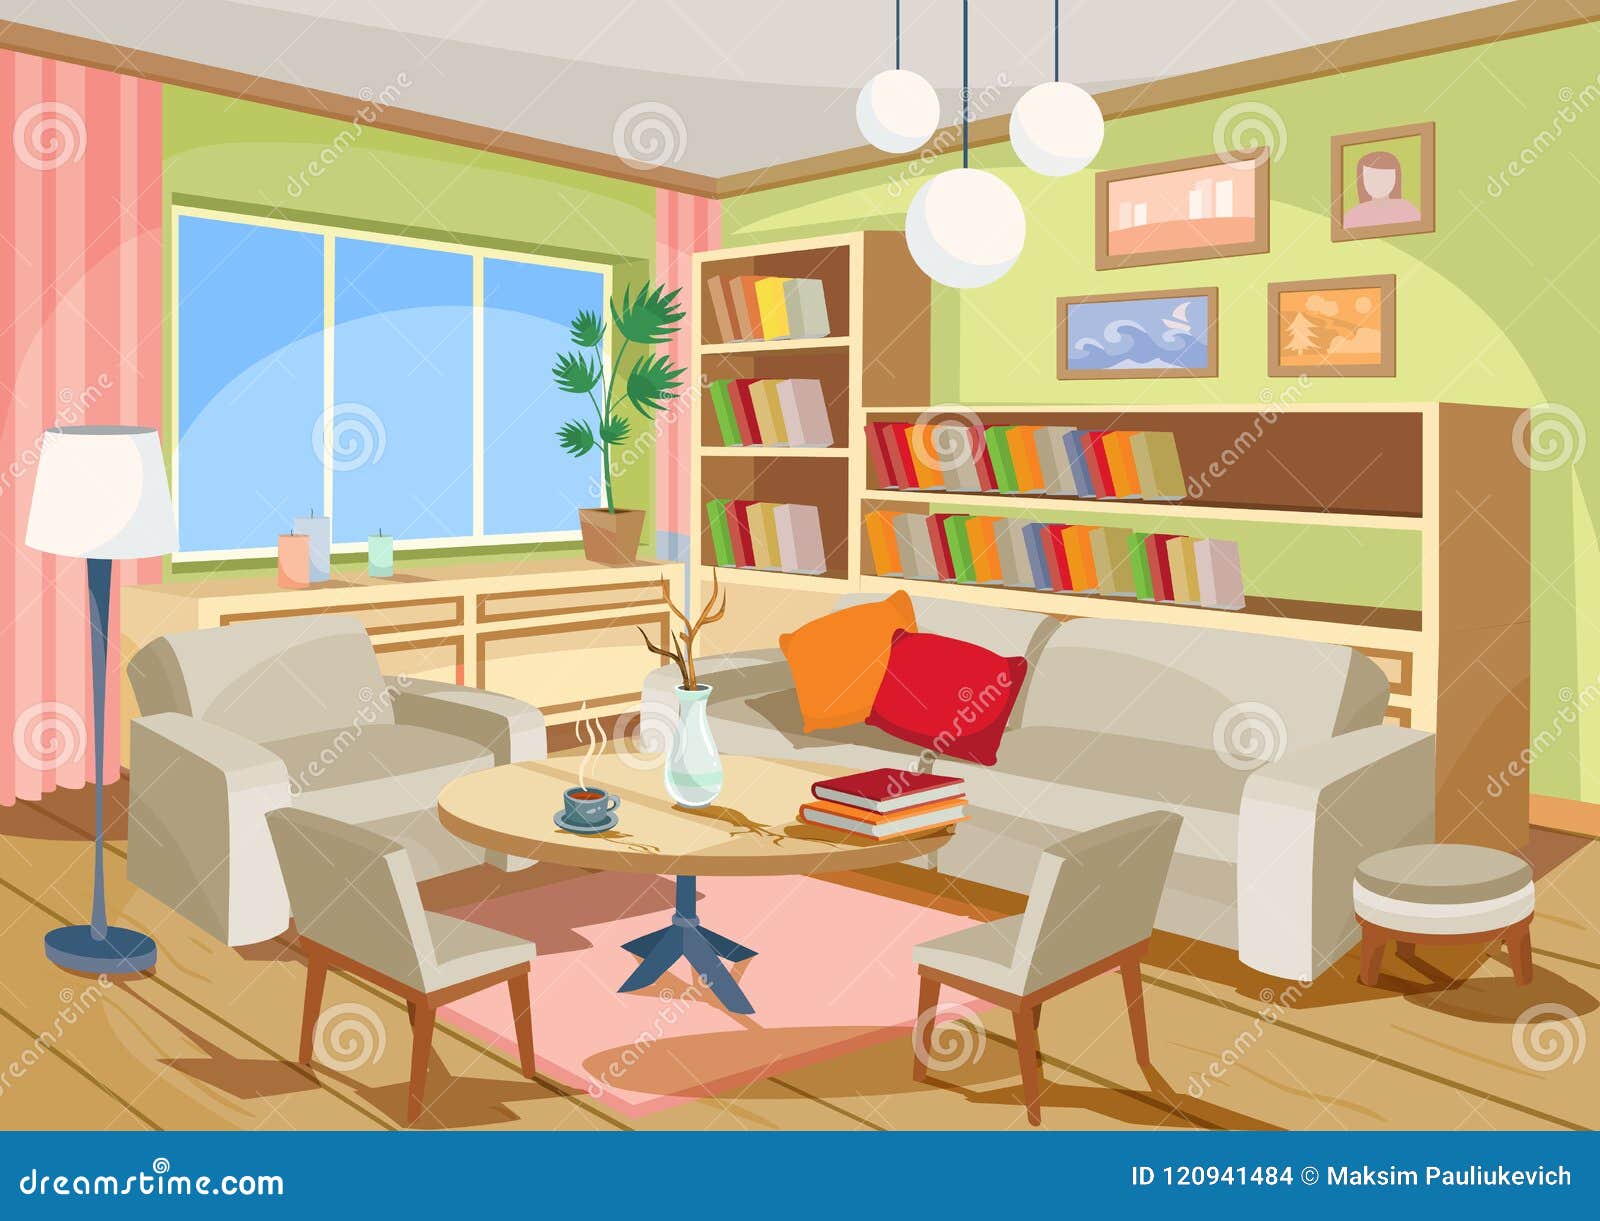 Illustration Of A Cozy Cartoon Interior Of A Home Room, A Living ...